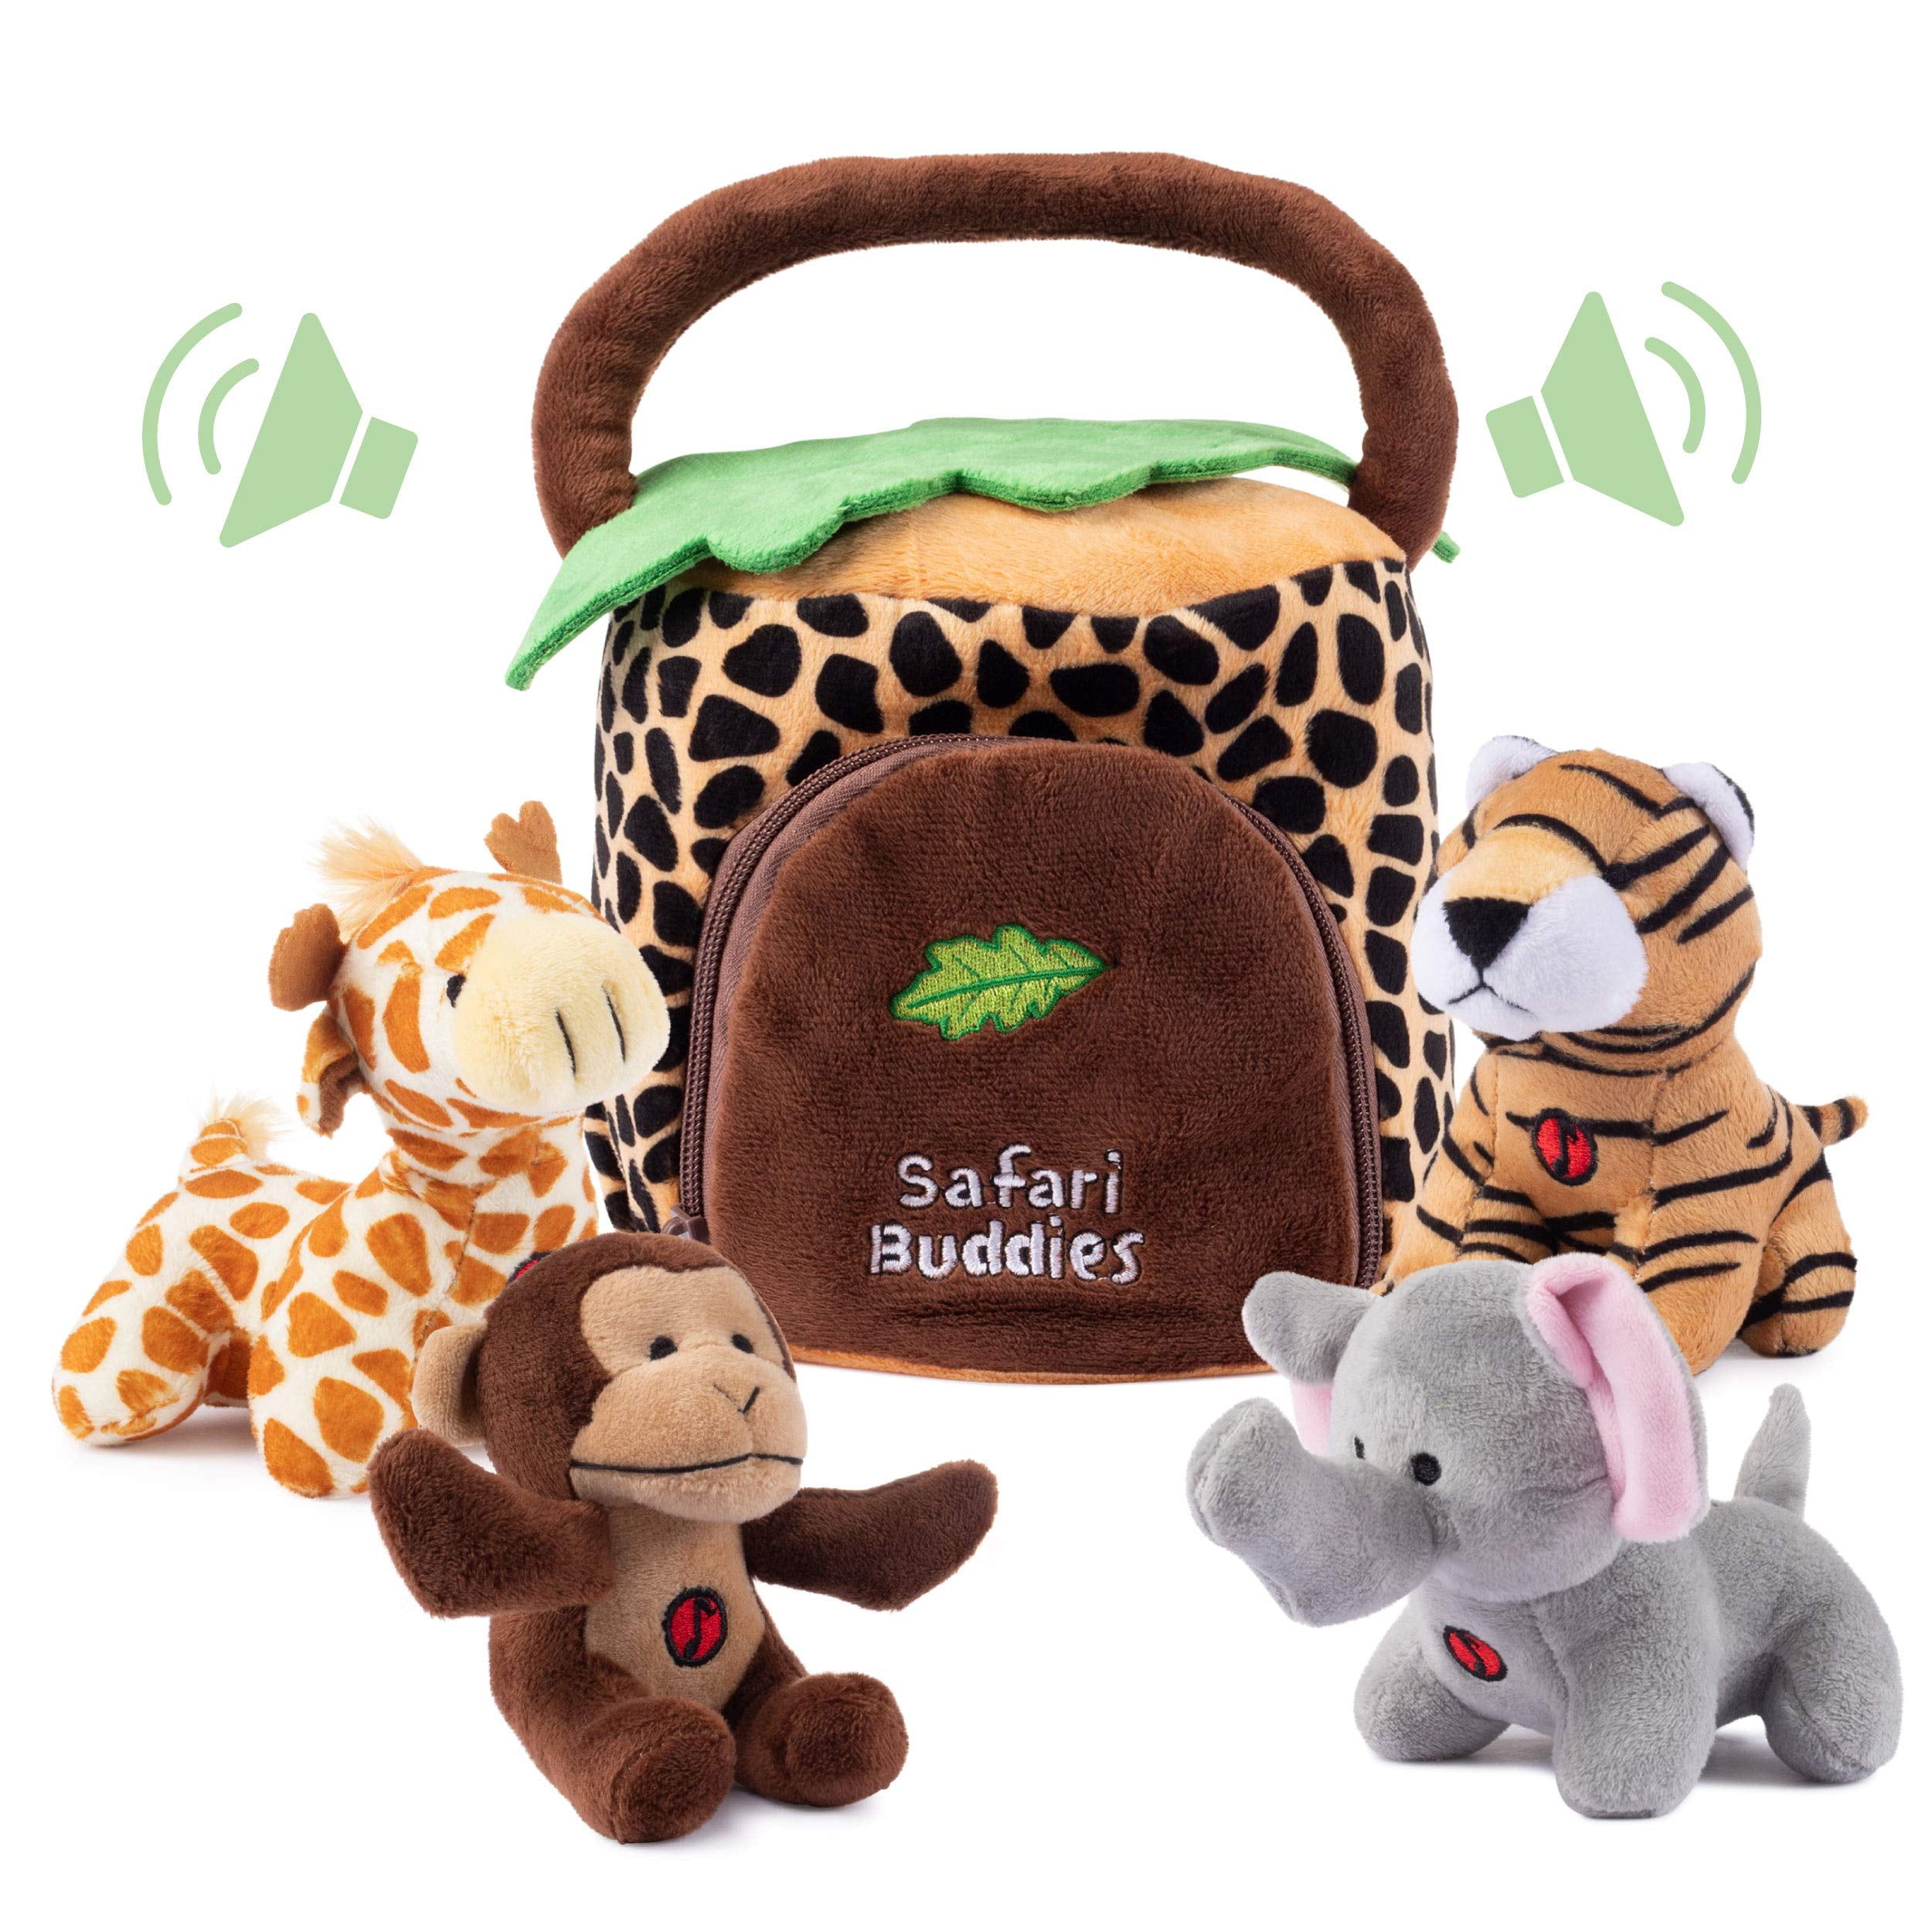 Puzzled Monkey Super-Soft Stuffed Plush Travel Neck Pillow Cuddly Animal Great head Support 11 INCH Item #5795 Animals / Wild Animals / Zoo Animals Theme 